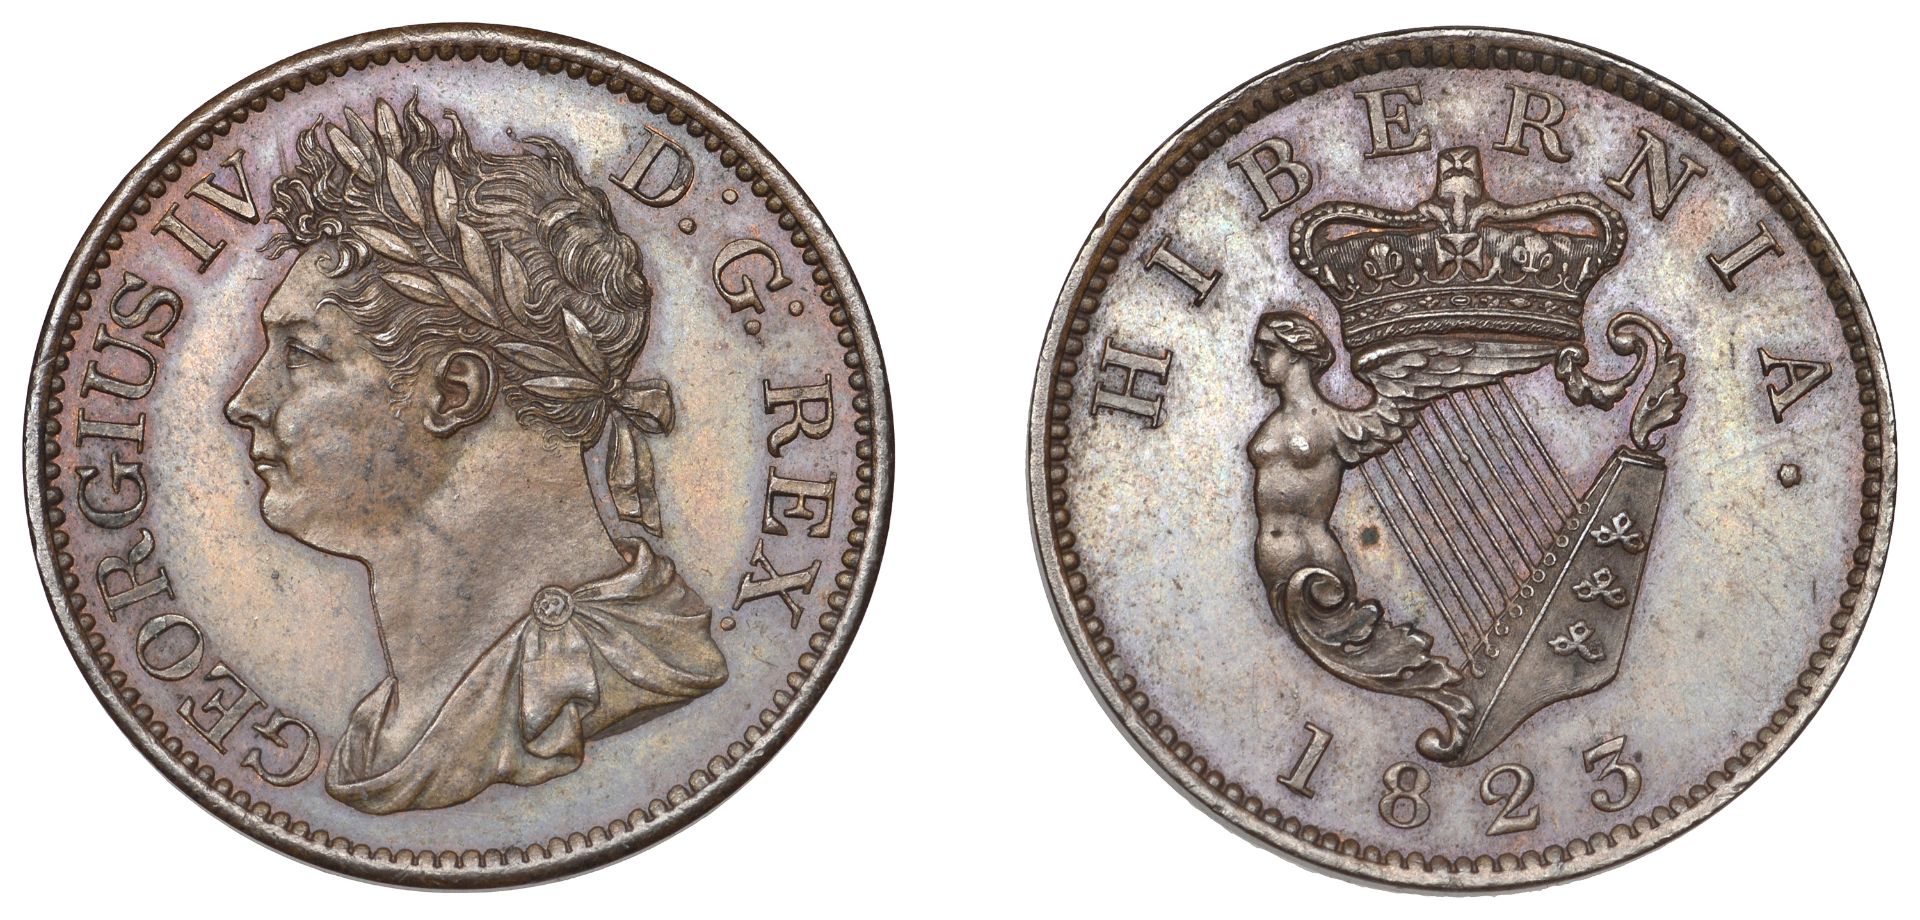 George IV (1820-1830), Halfpenny, 1823 (S 6624). Extremely fine Â£80-Â£100